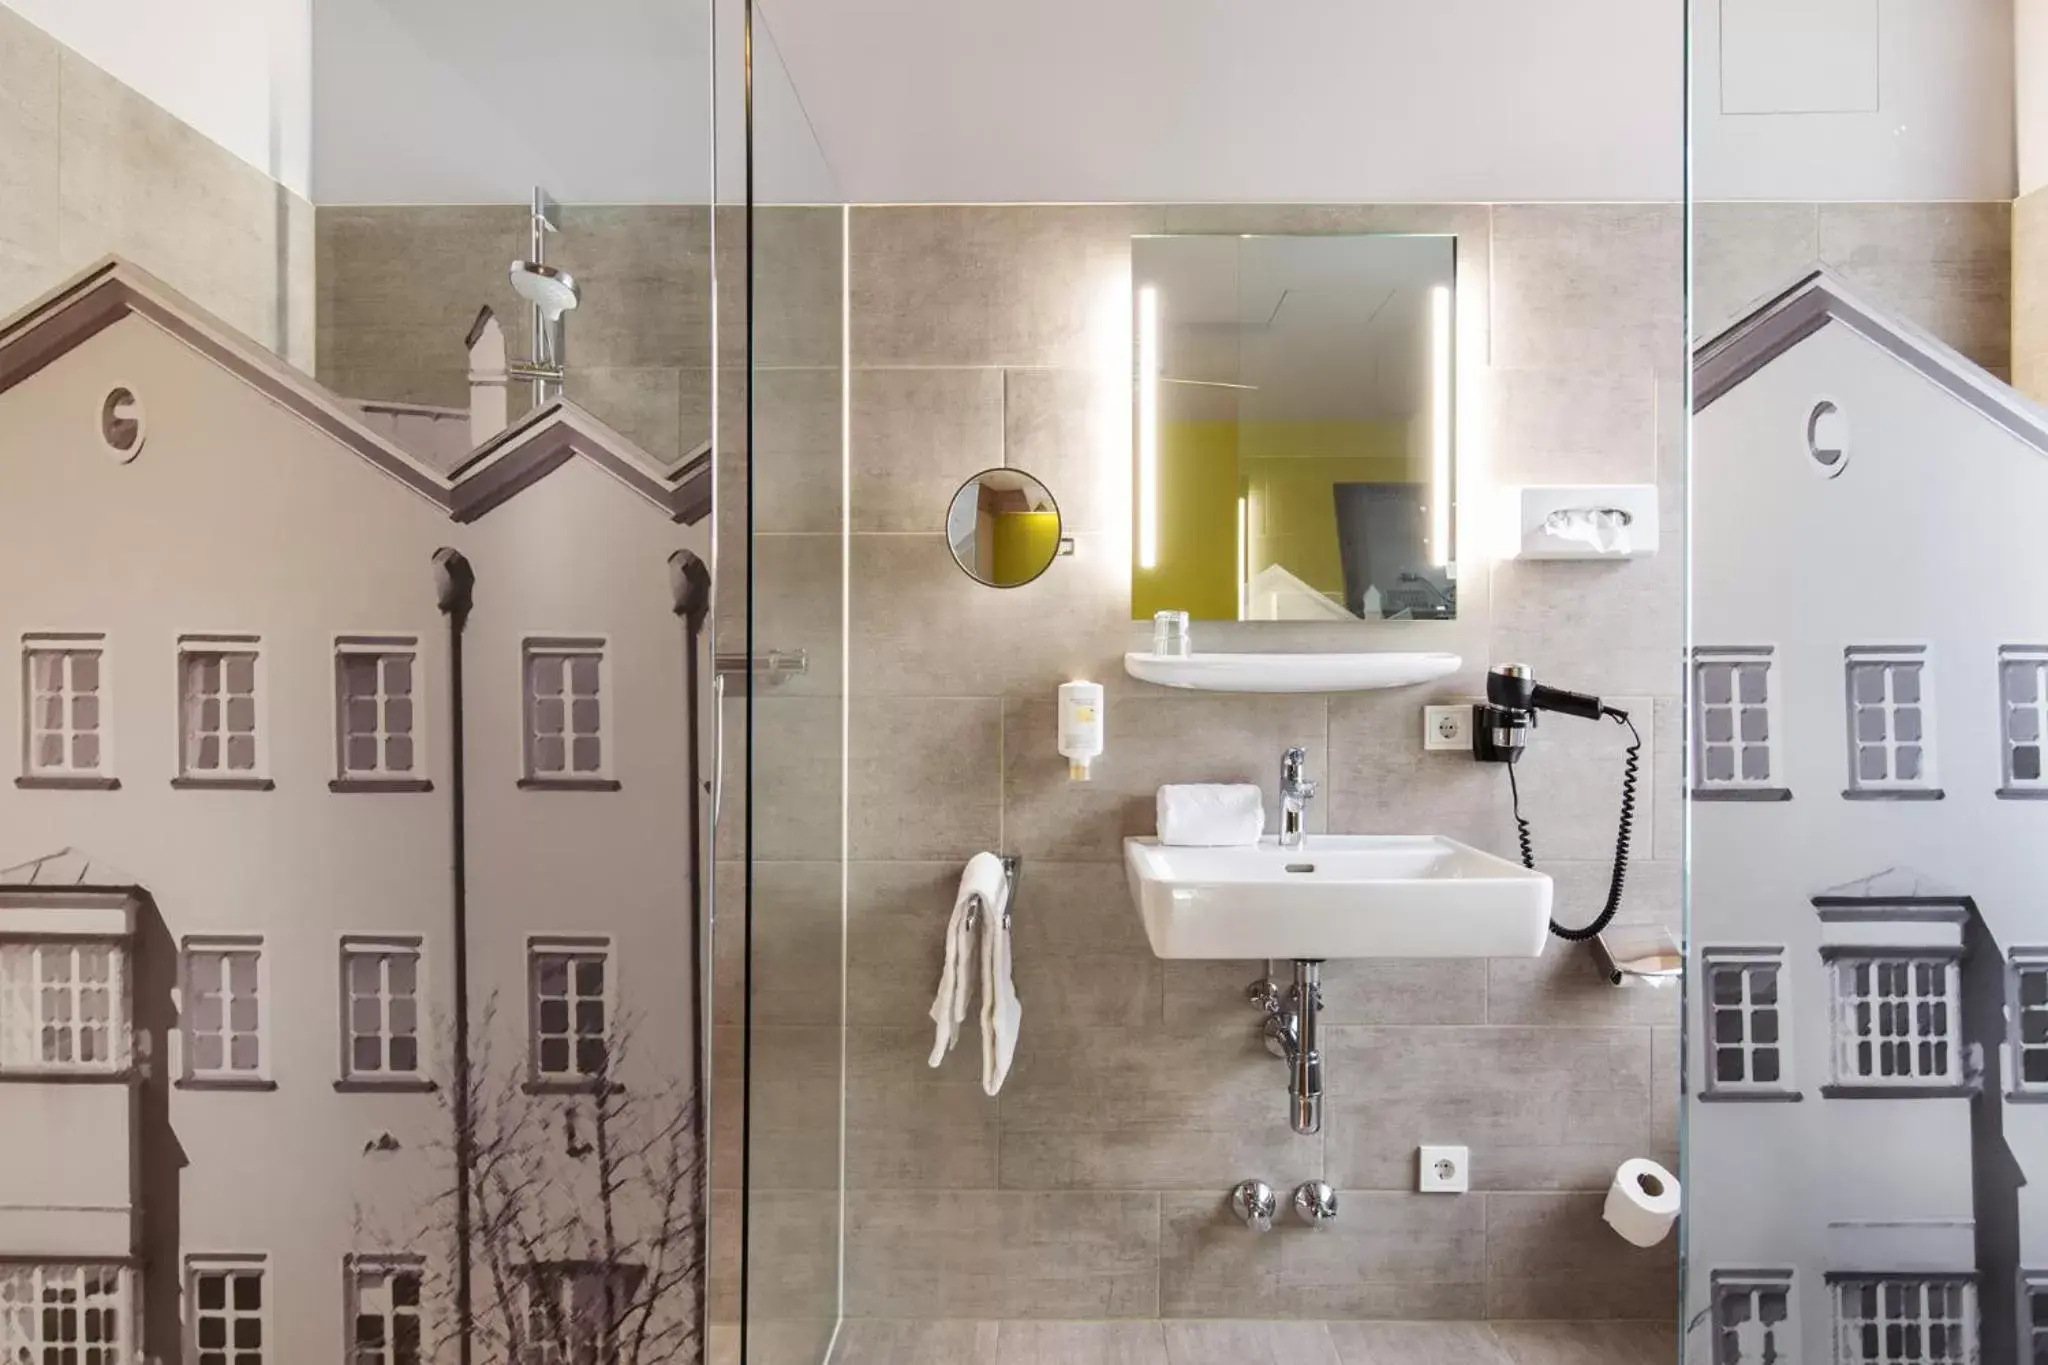 Bathroom in Basic Hotel Innsbruck